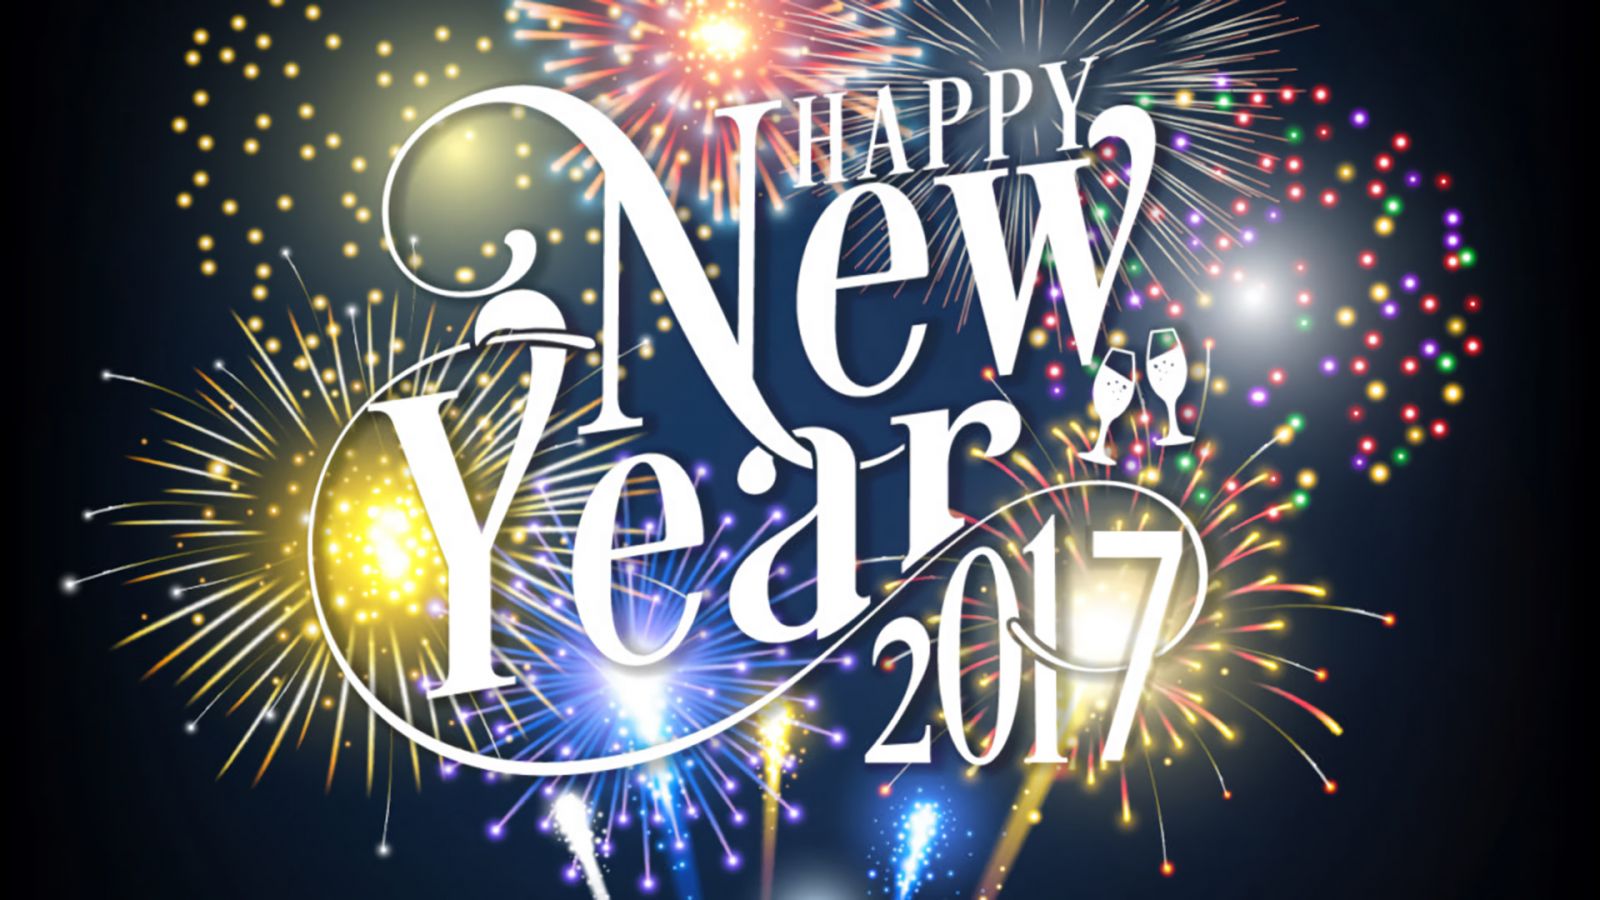 hinh-nen-happy-new-year-2017-28.jpg